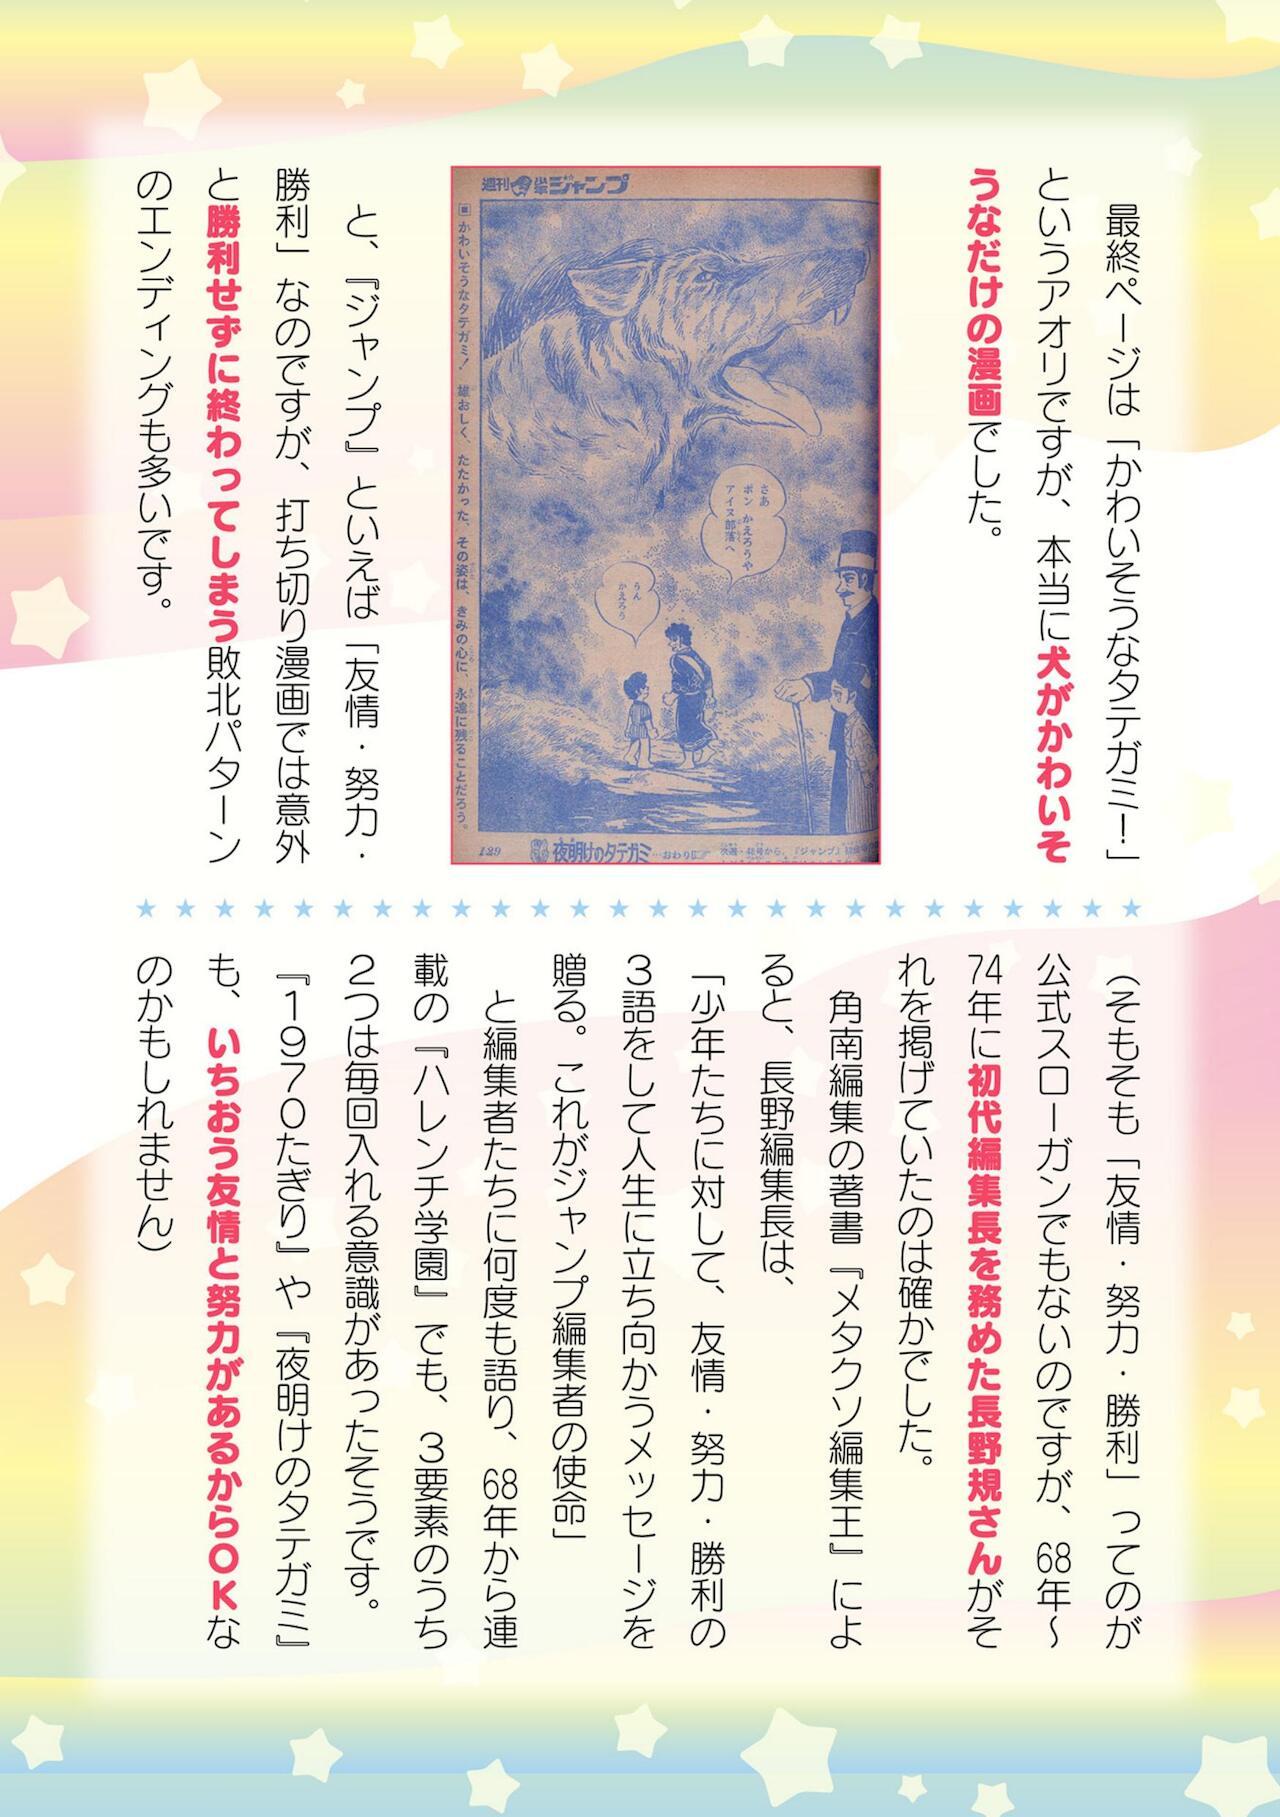 2D Dream Magazine Vol. 116 731